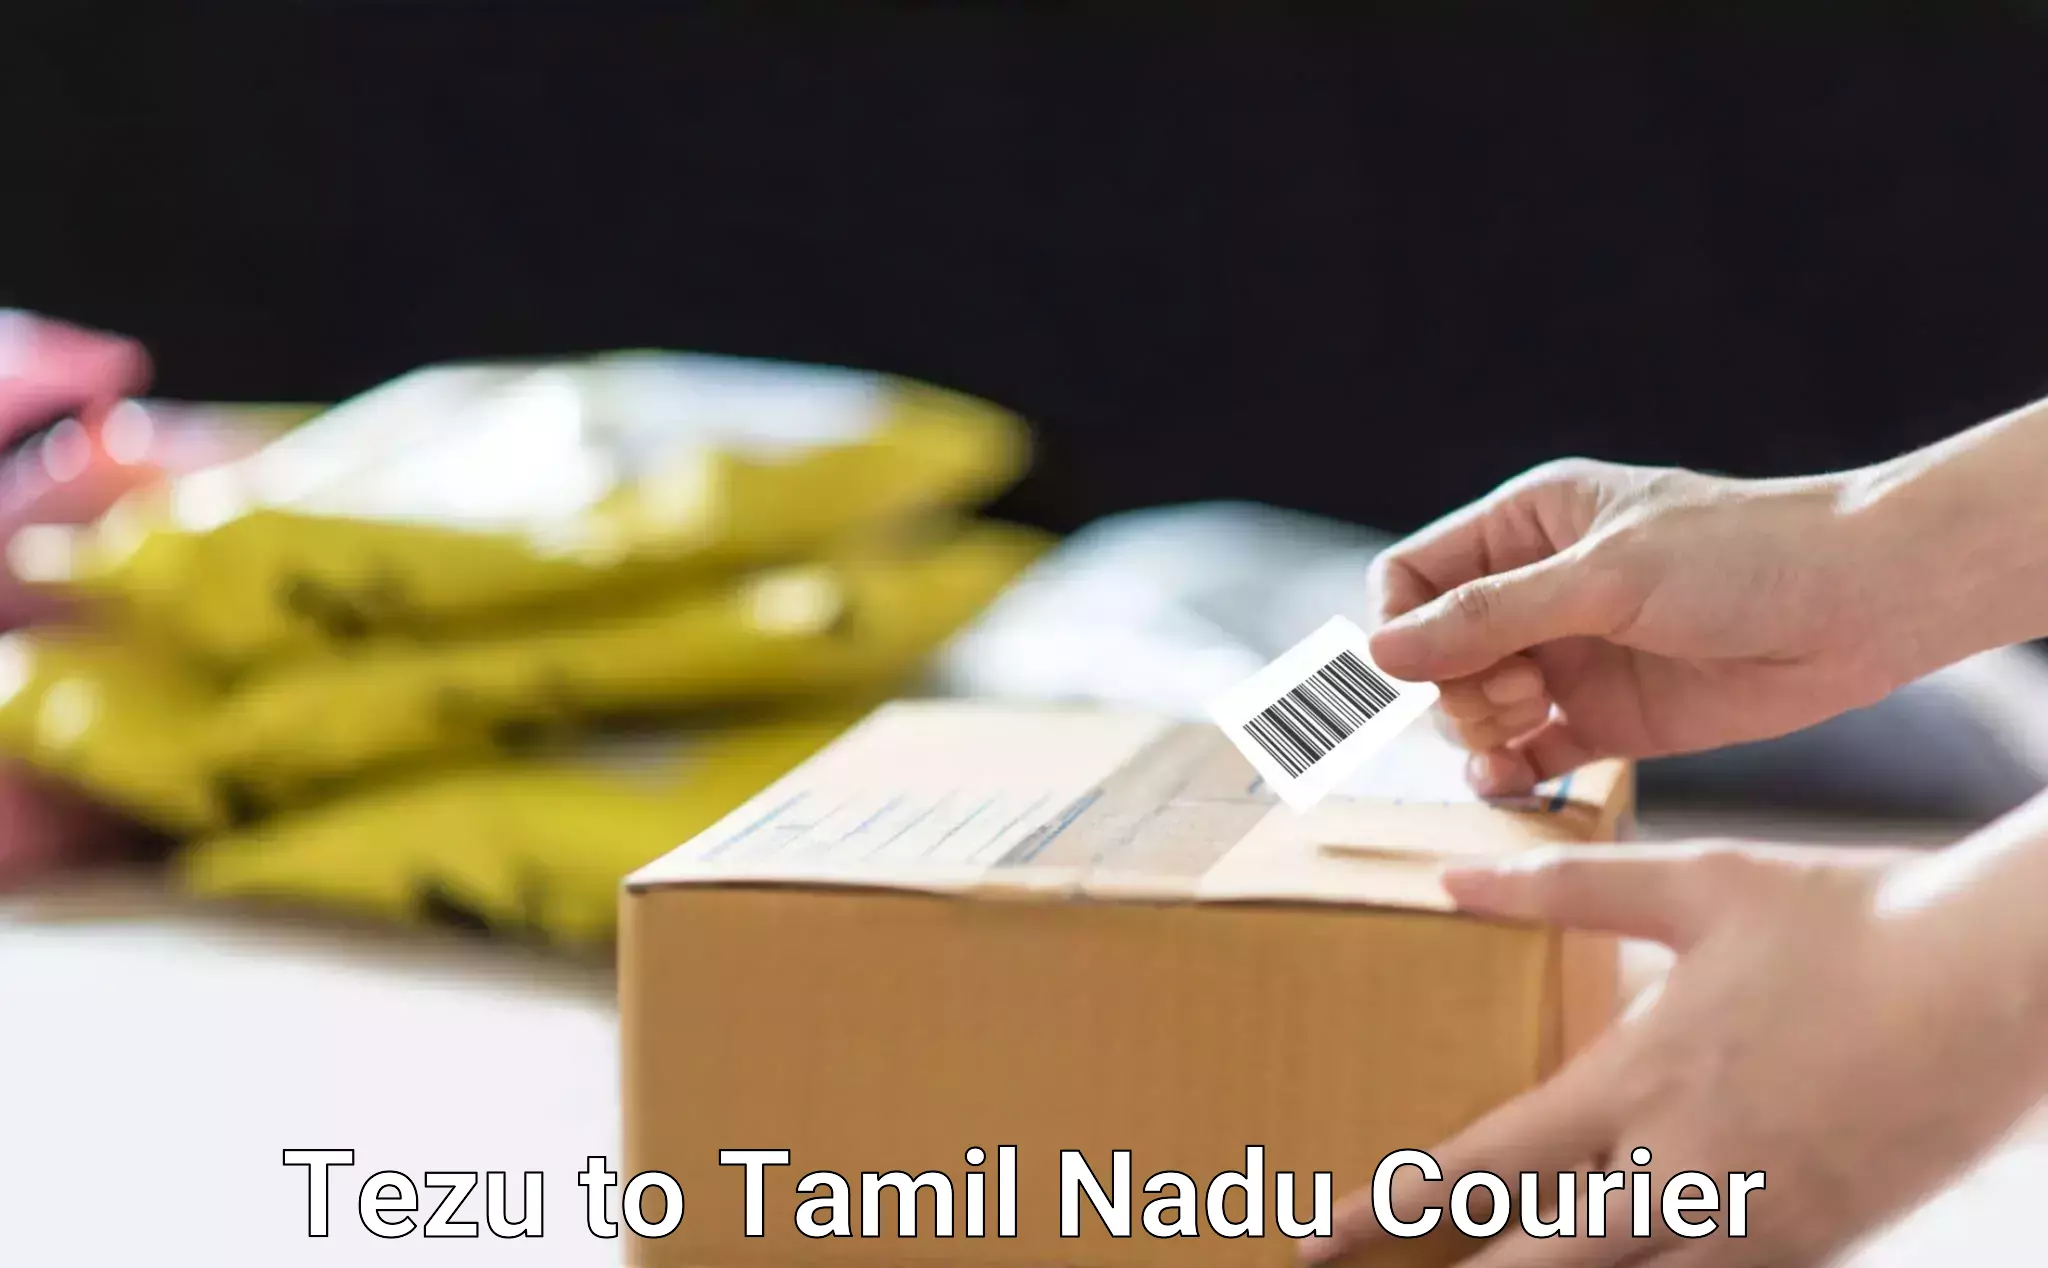 Cash on delivery service Tezu to Tamil Nadu